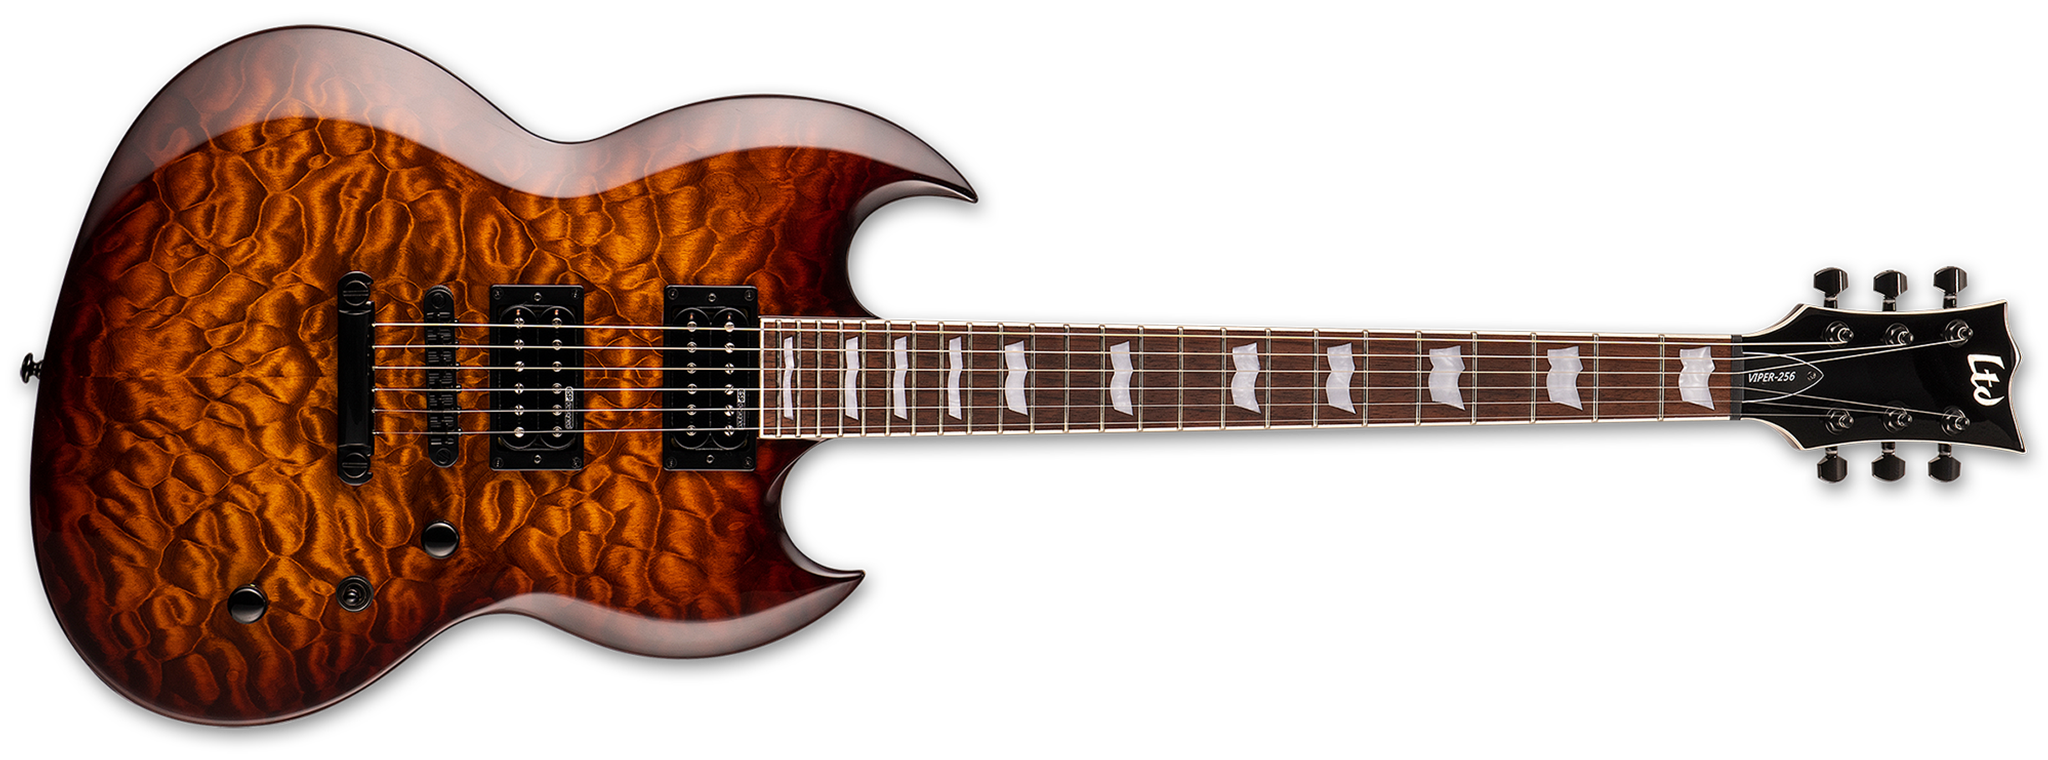 LTD Standard Series Viper-256   Dark Brown Sunburst   6-String Electric Guitar  